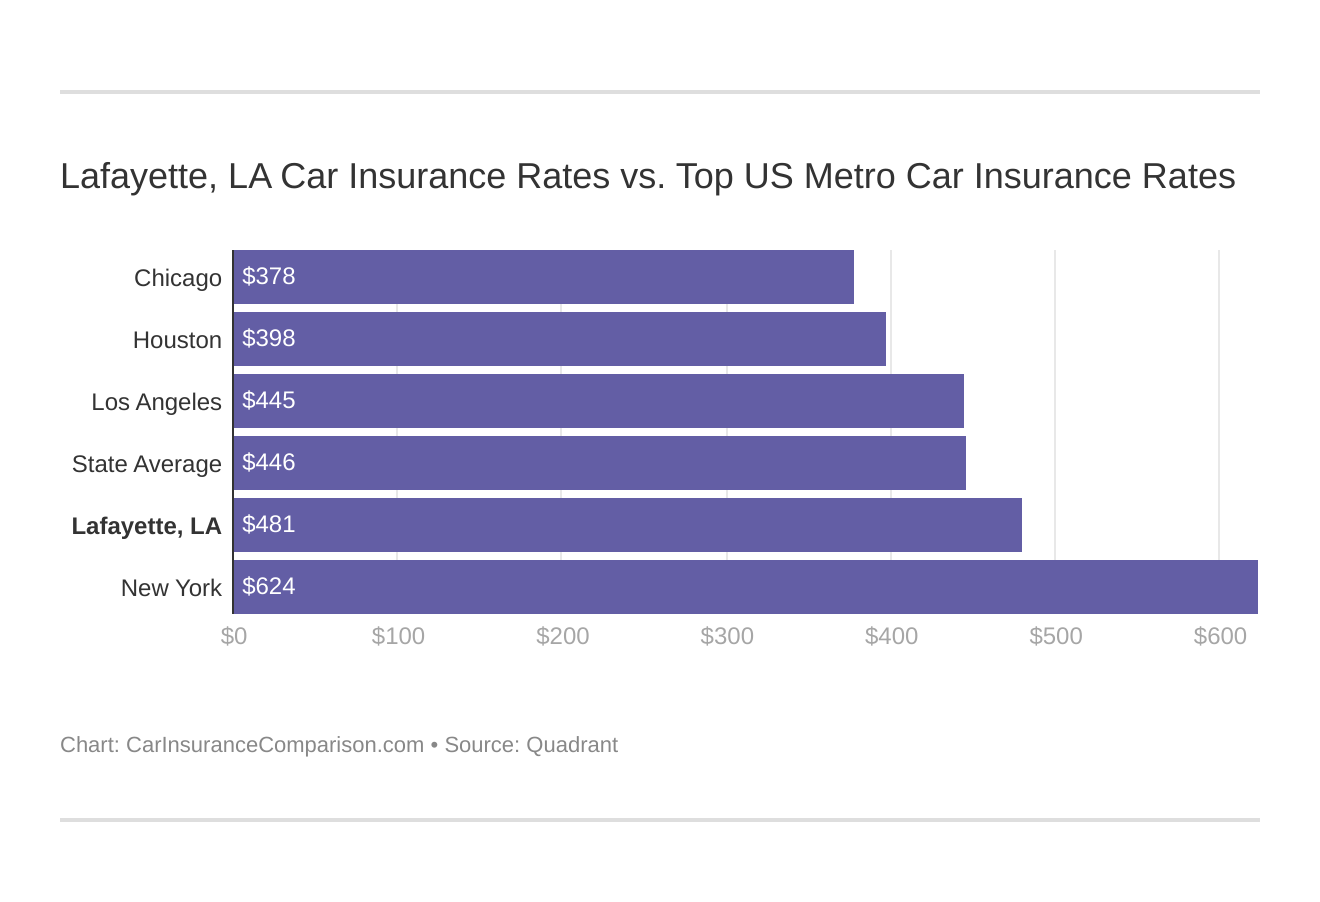 Lafayette, LA Car Insurance Rates vs. Top US Metro Car Insurance Rates